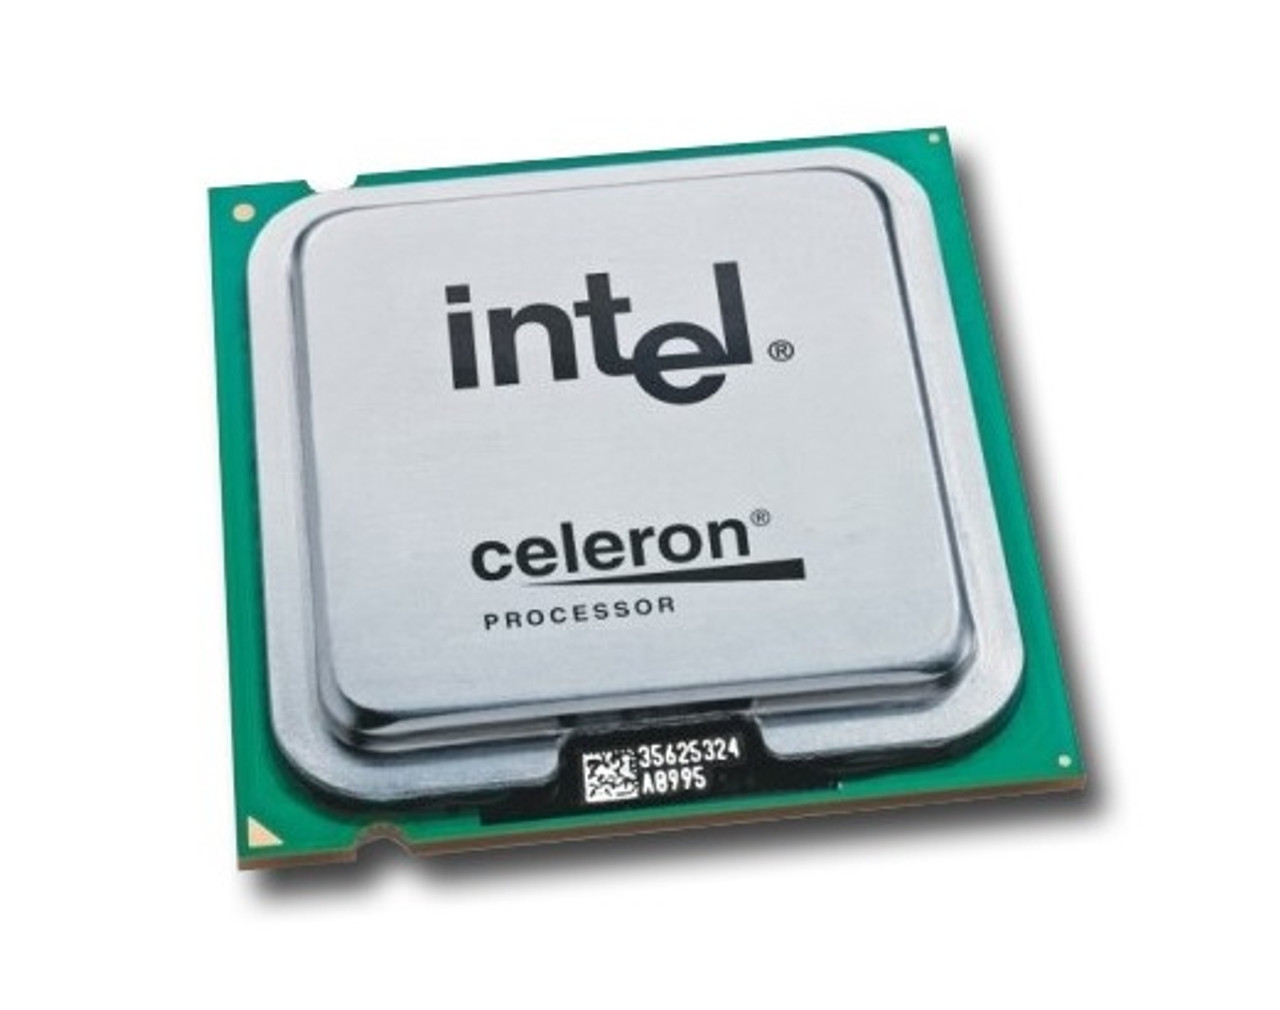 SL86D - Intel Celeron 370 1.50GHz 400MHz FSB 1MB L2 Cache Socket H-PBGA479 Mobile Processor